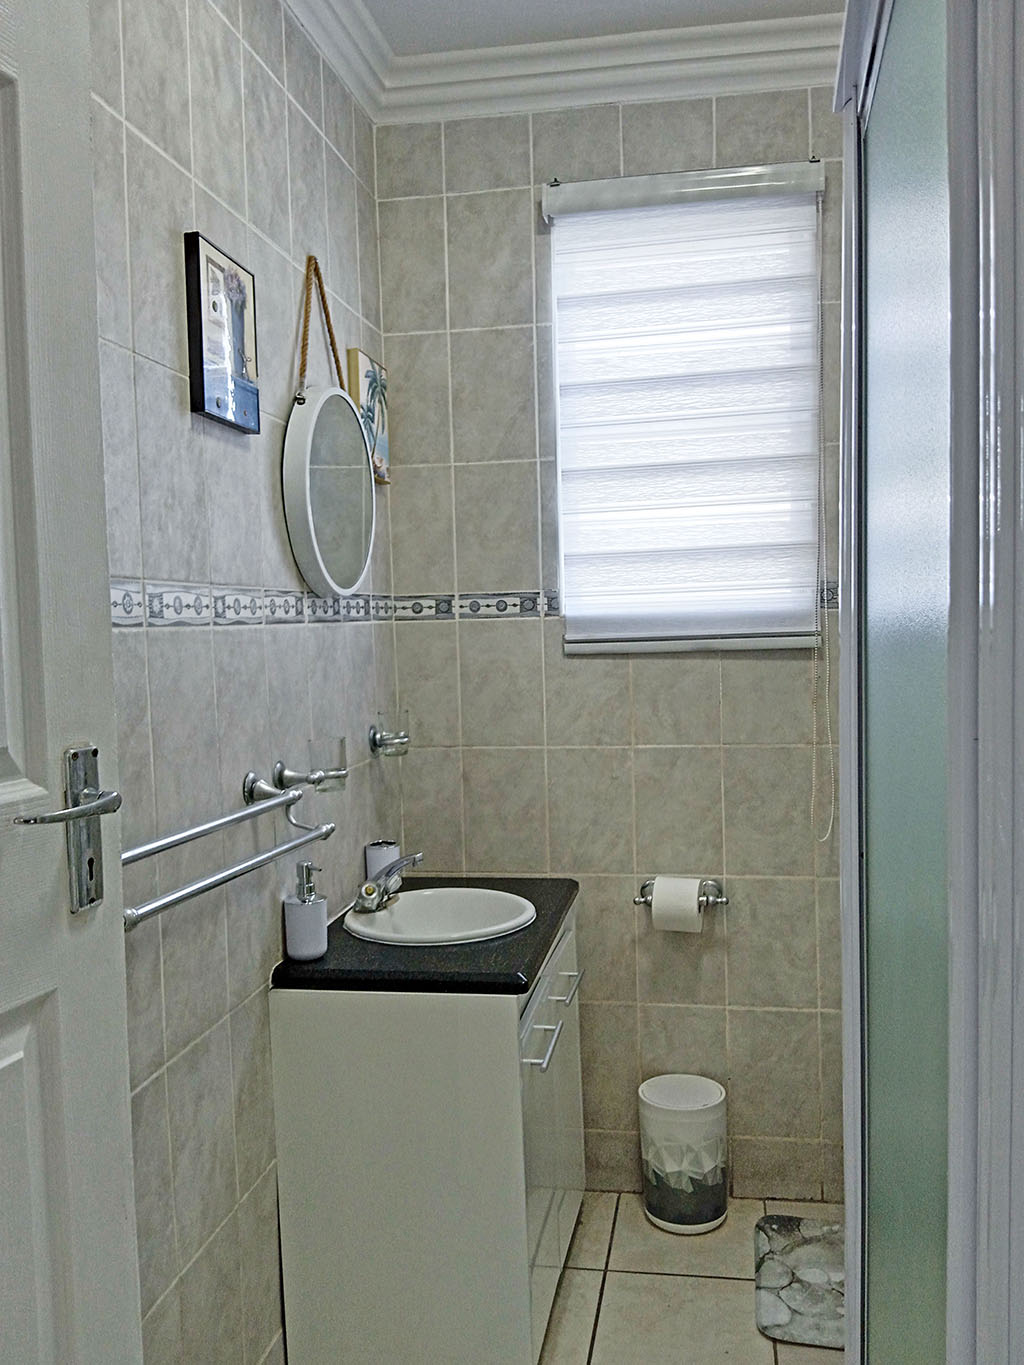 To Let 2 Bedroom Property for Rent in Umdloti Beach KwaZulu-Natal